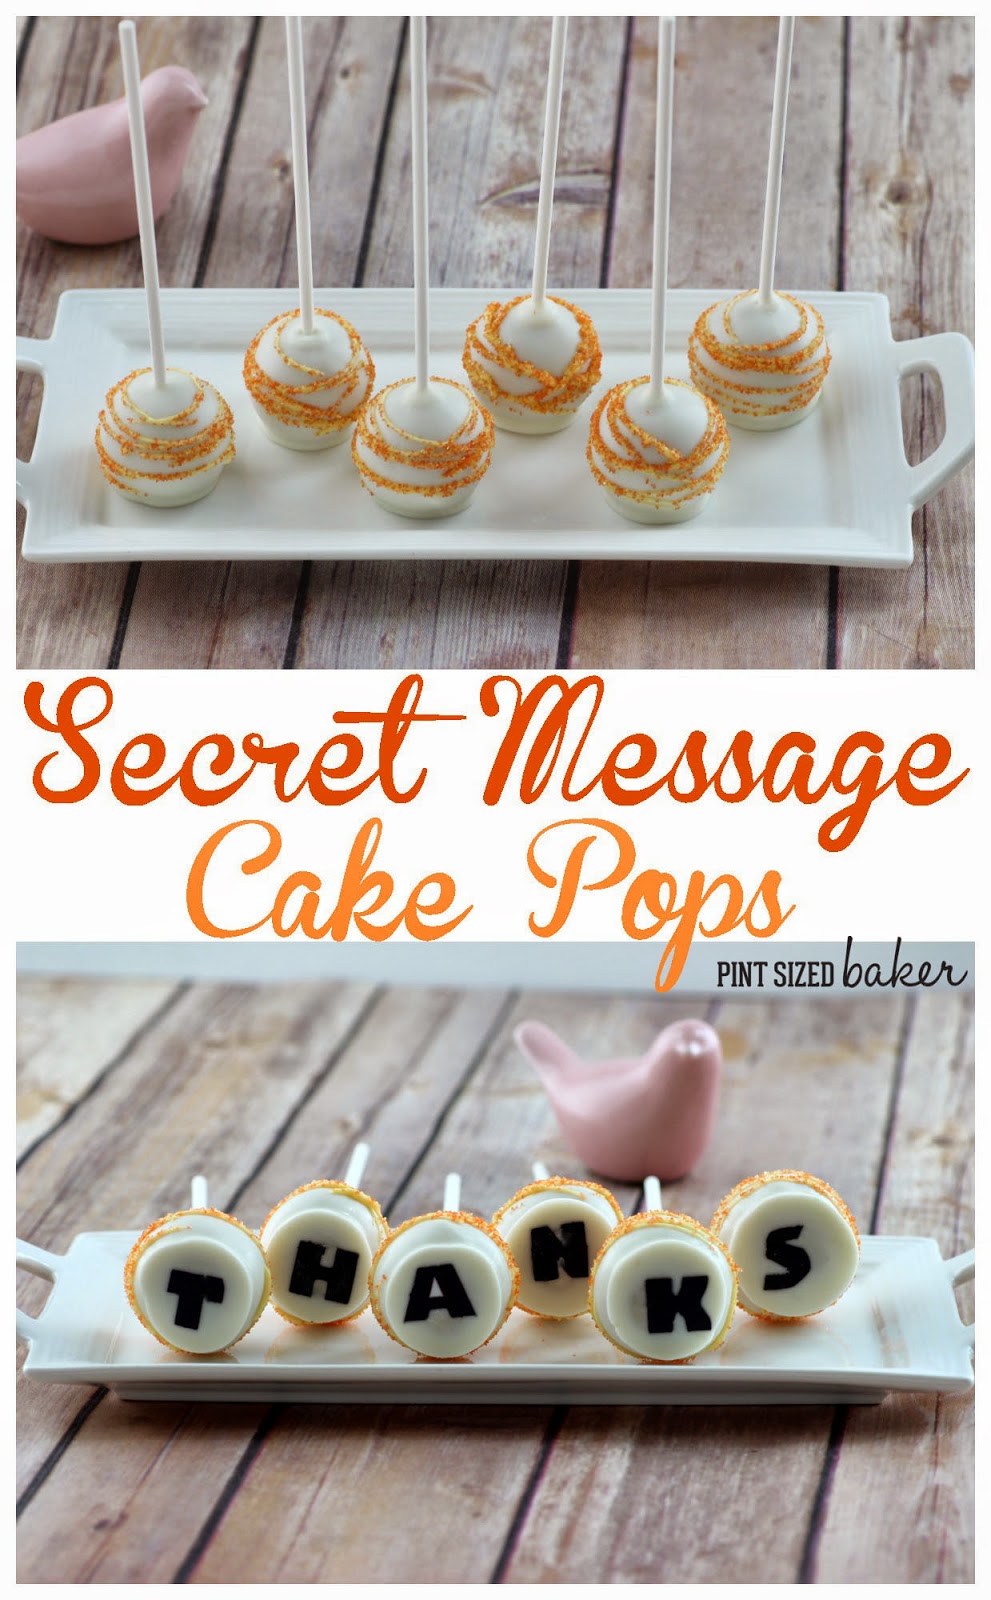 How to make "Secret Message" Cake Pops from Pint Sized Baker